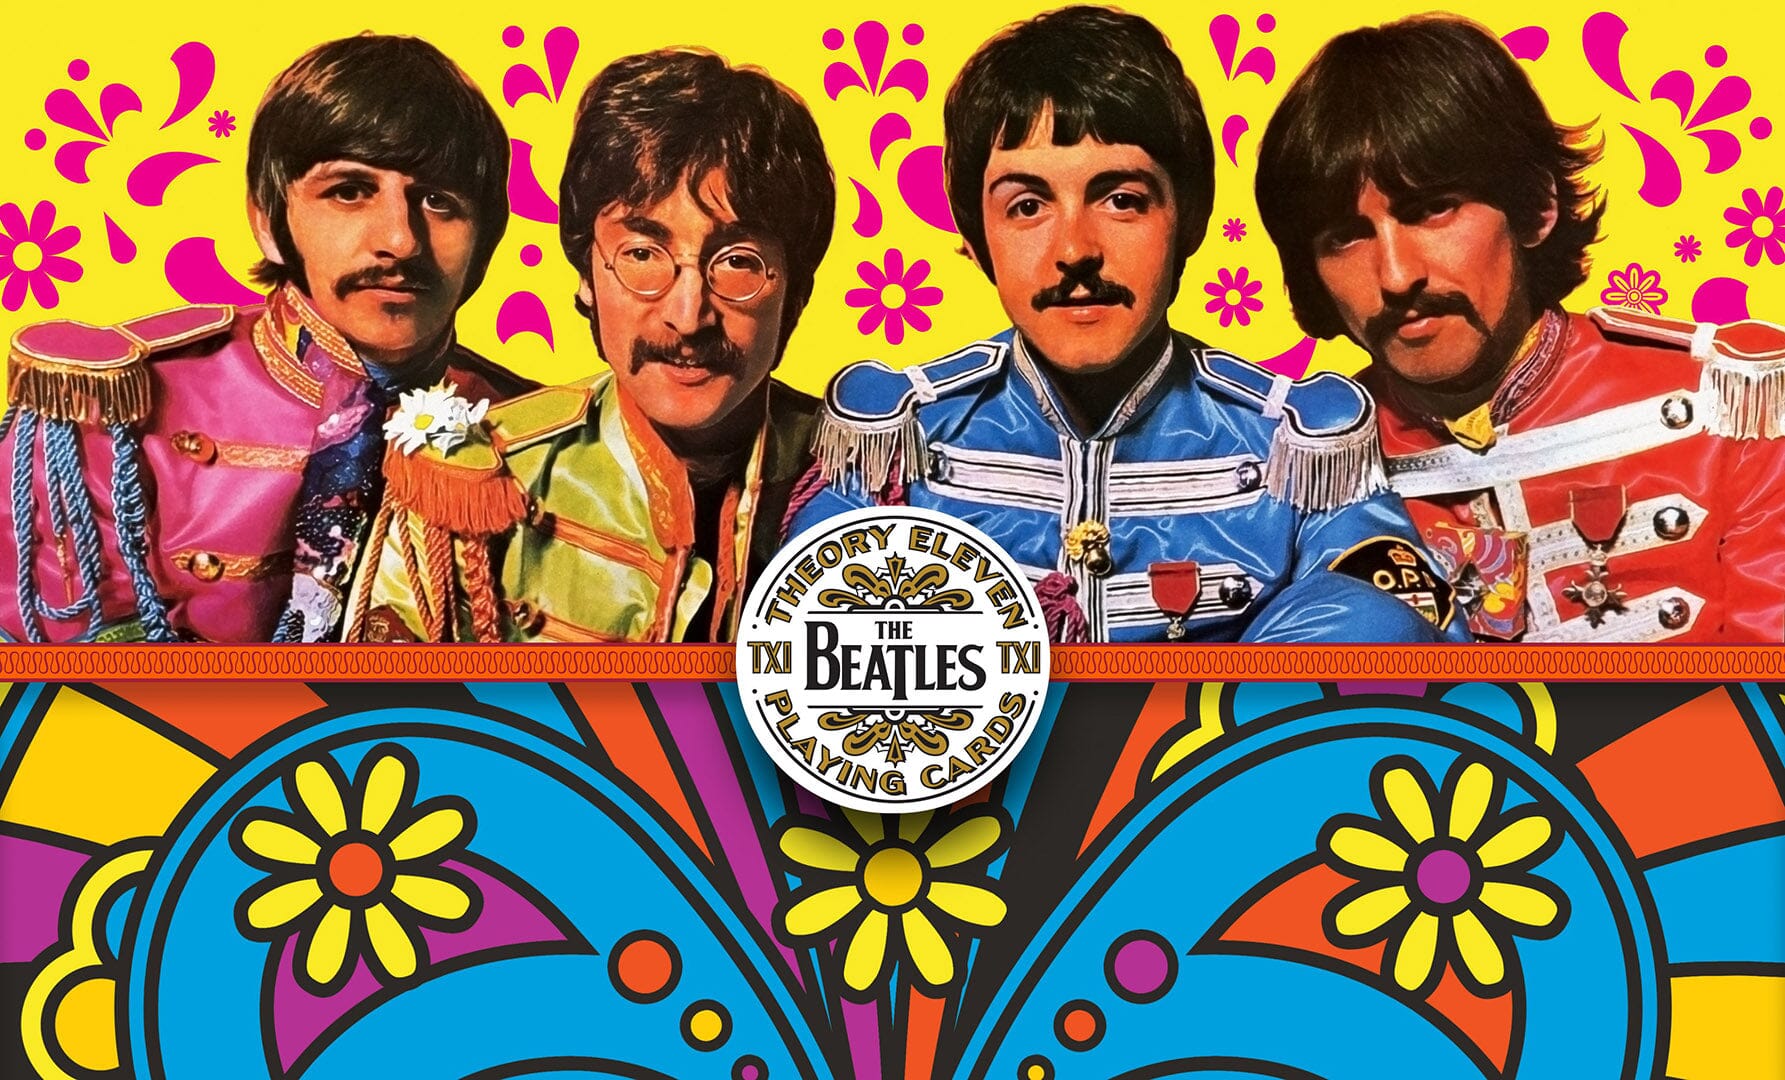 The Beatles - Ringo Star, John Lennon, Paul McCartney, George Harrison